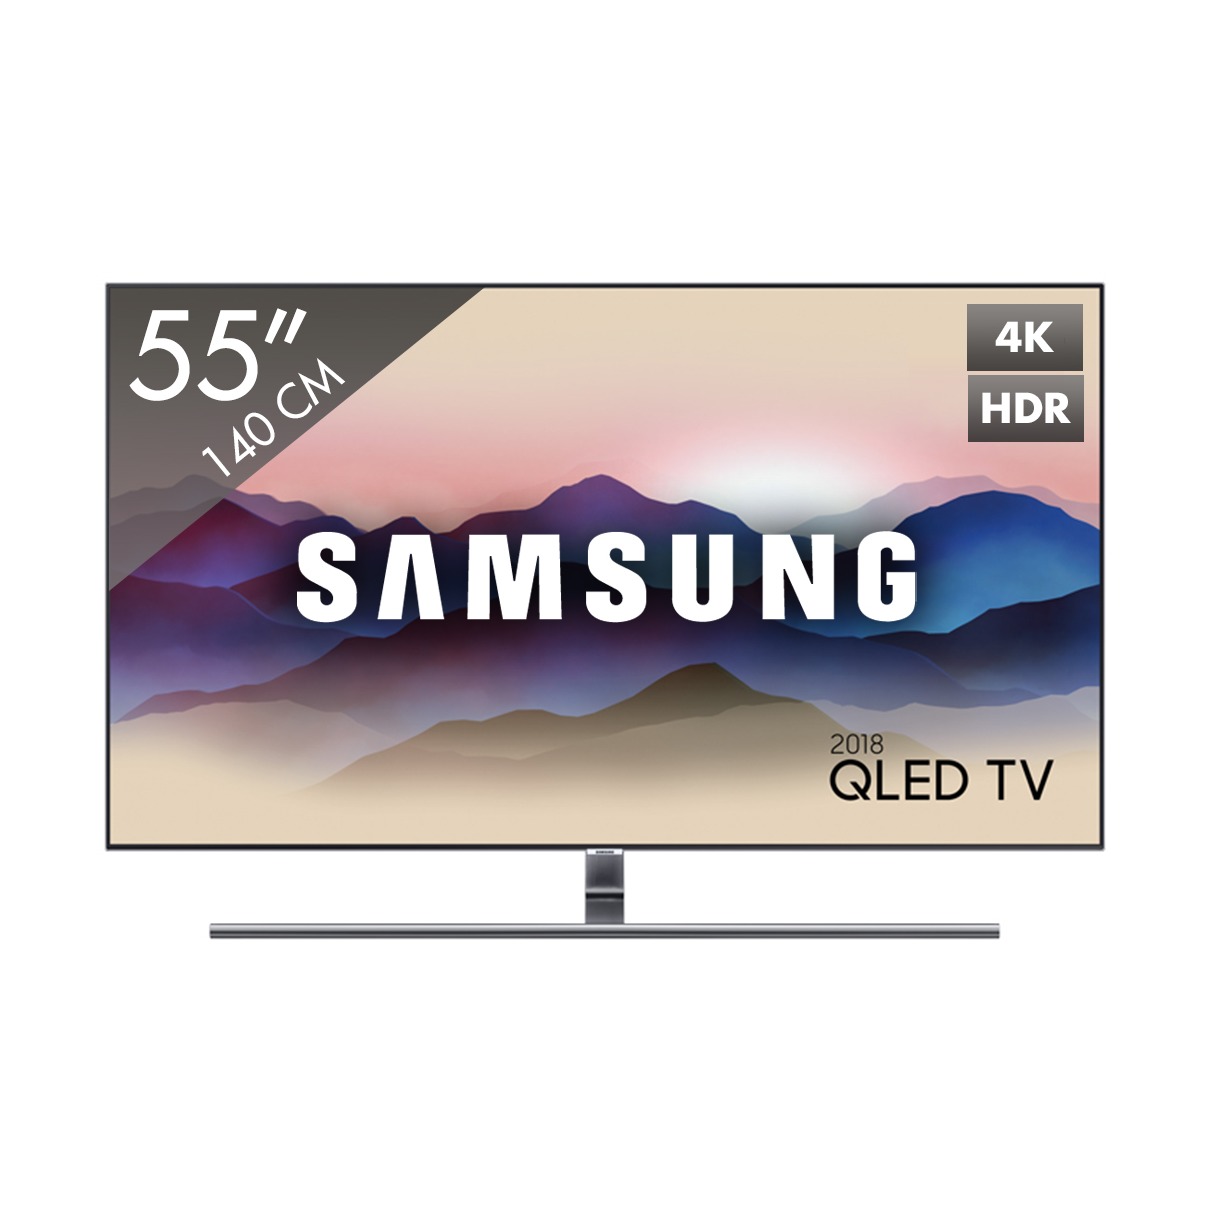 Telefoonleader - Samsung QE55Q7F QLED TV 2018